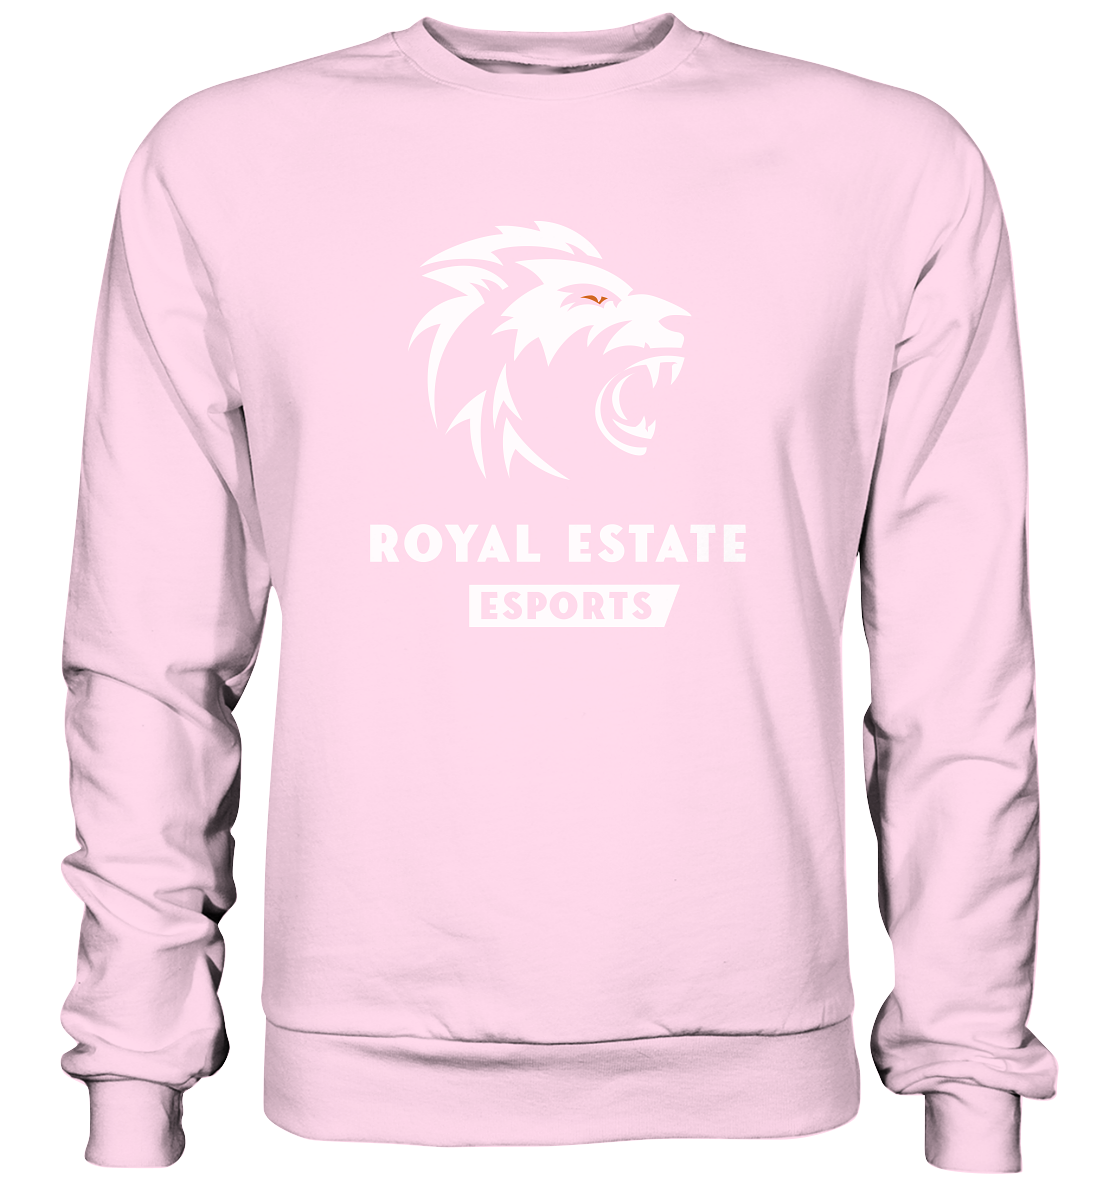 ROYAL ESTATE ESPORTS - Basic Sweatshirt